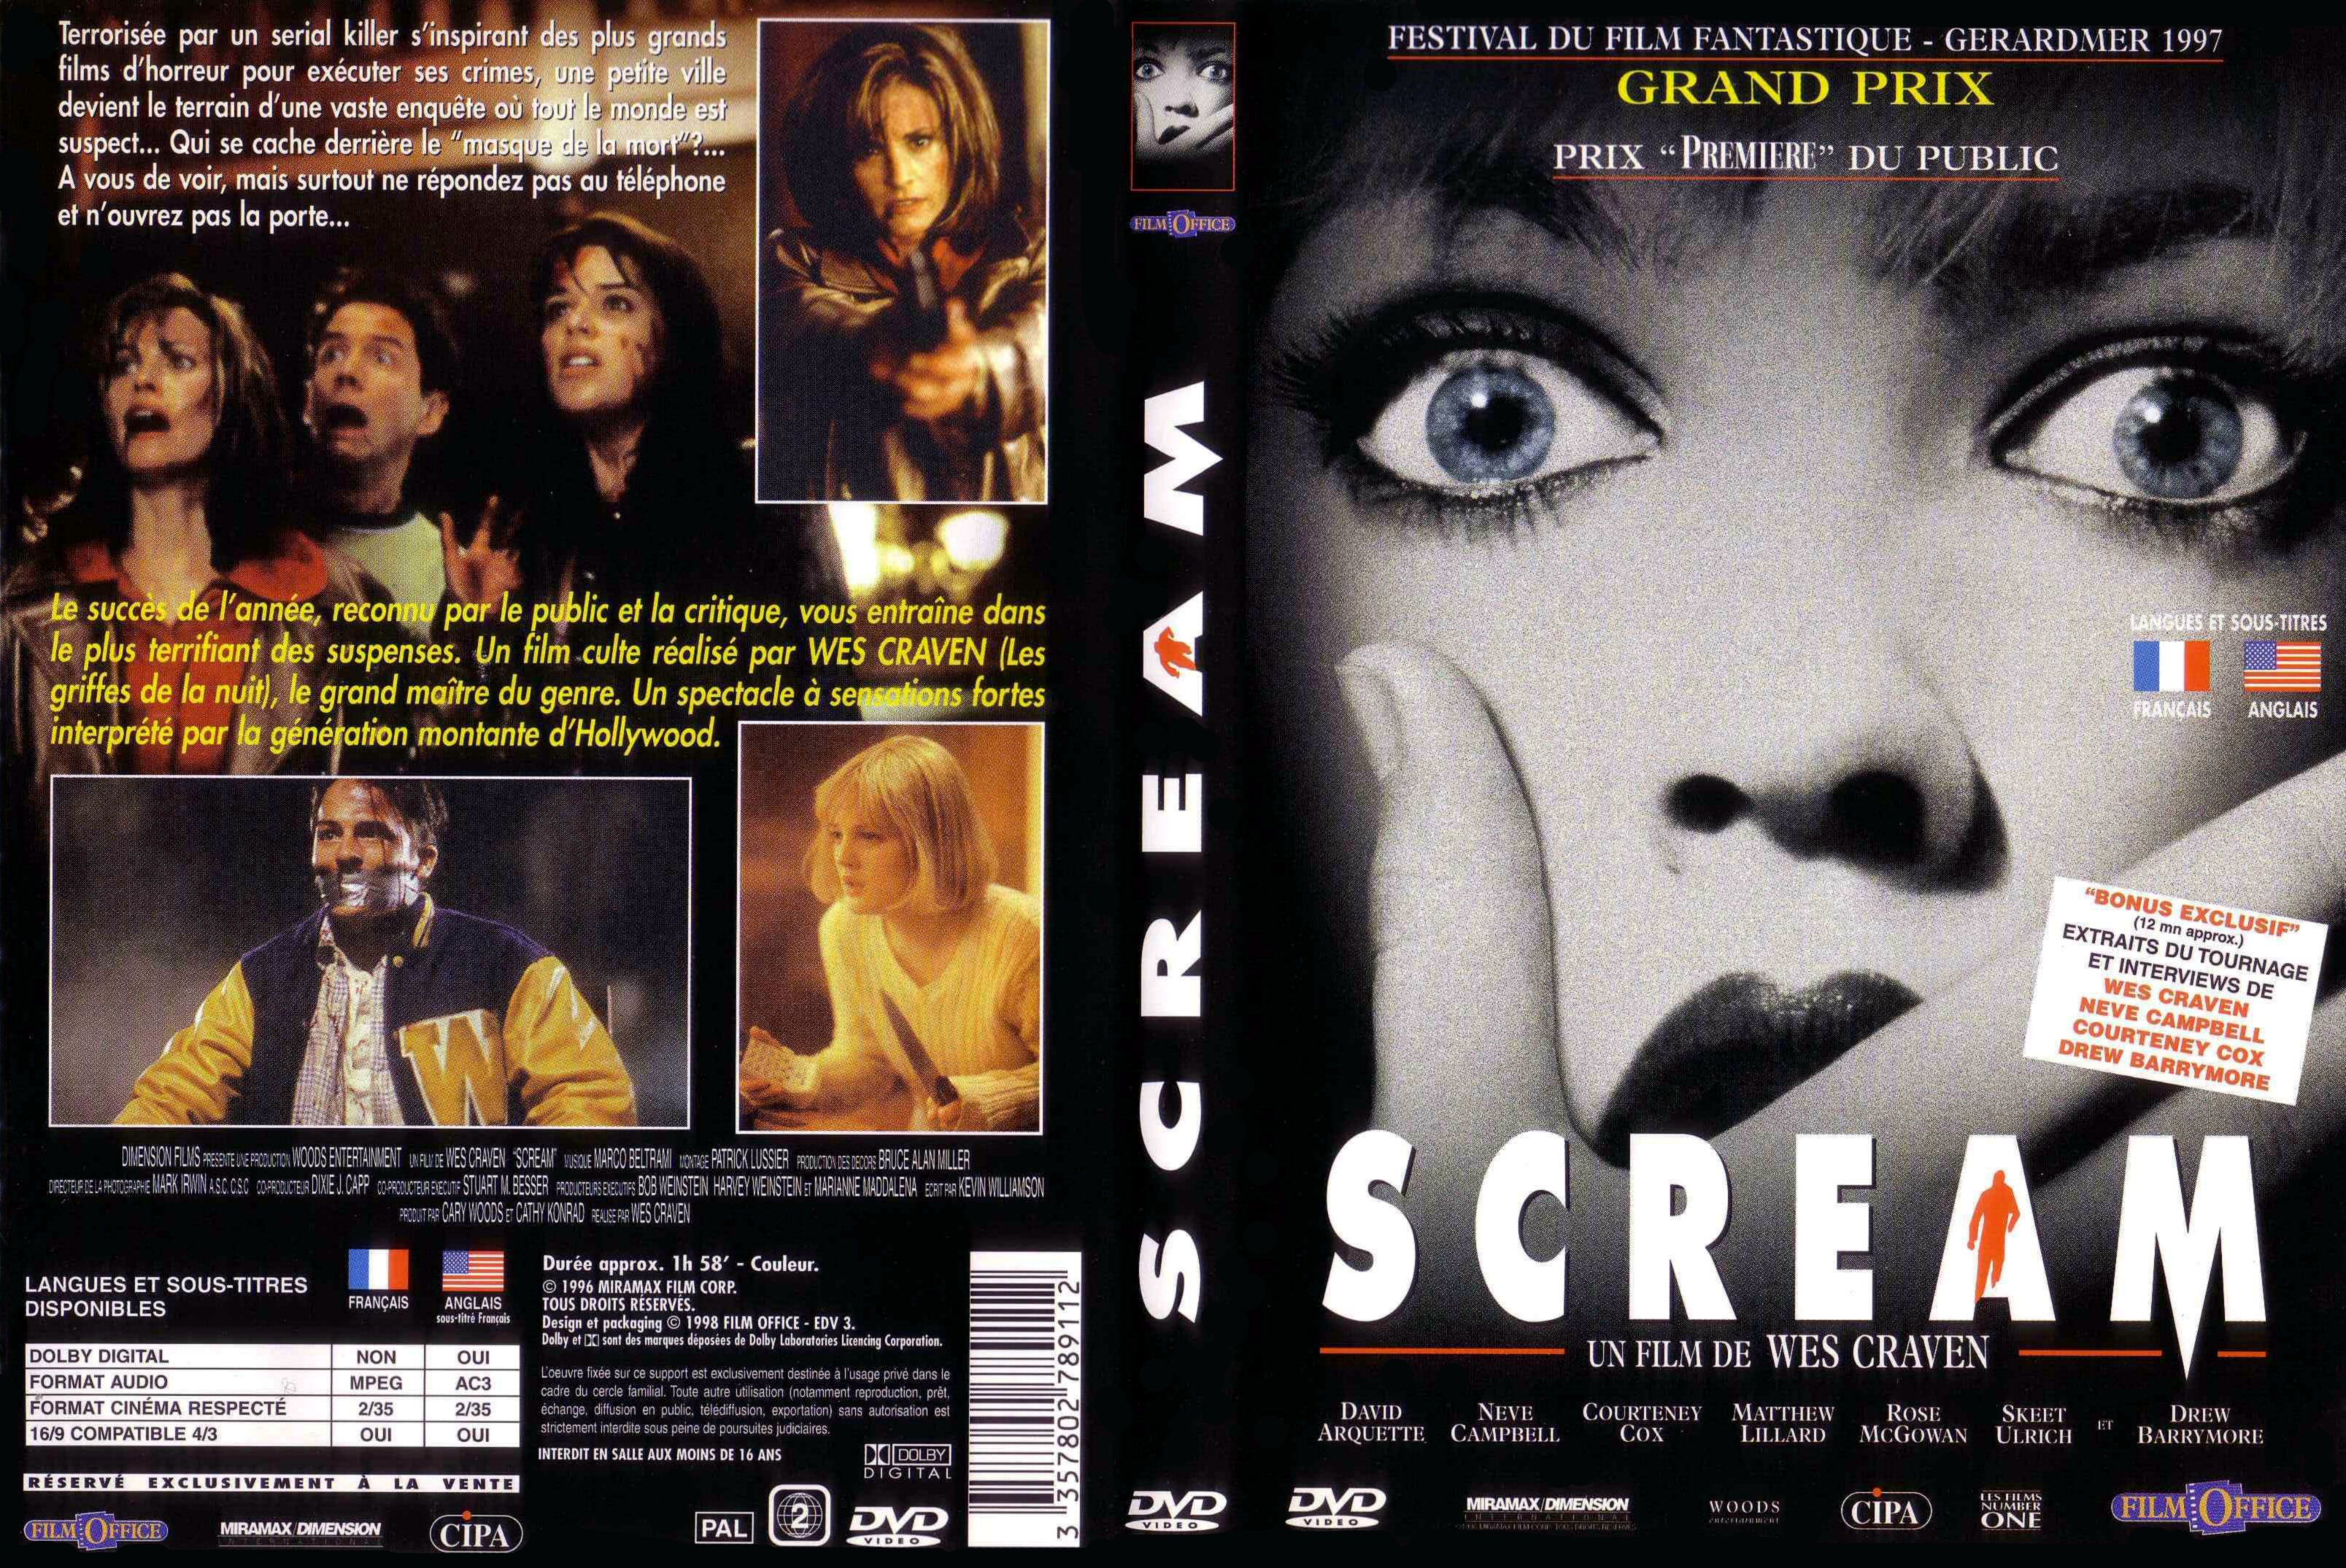 Jaquette DVD Scream v3